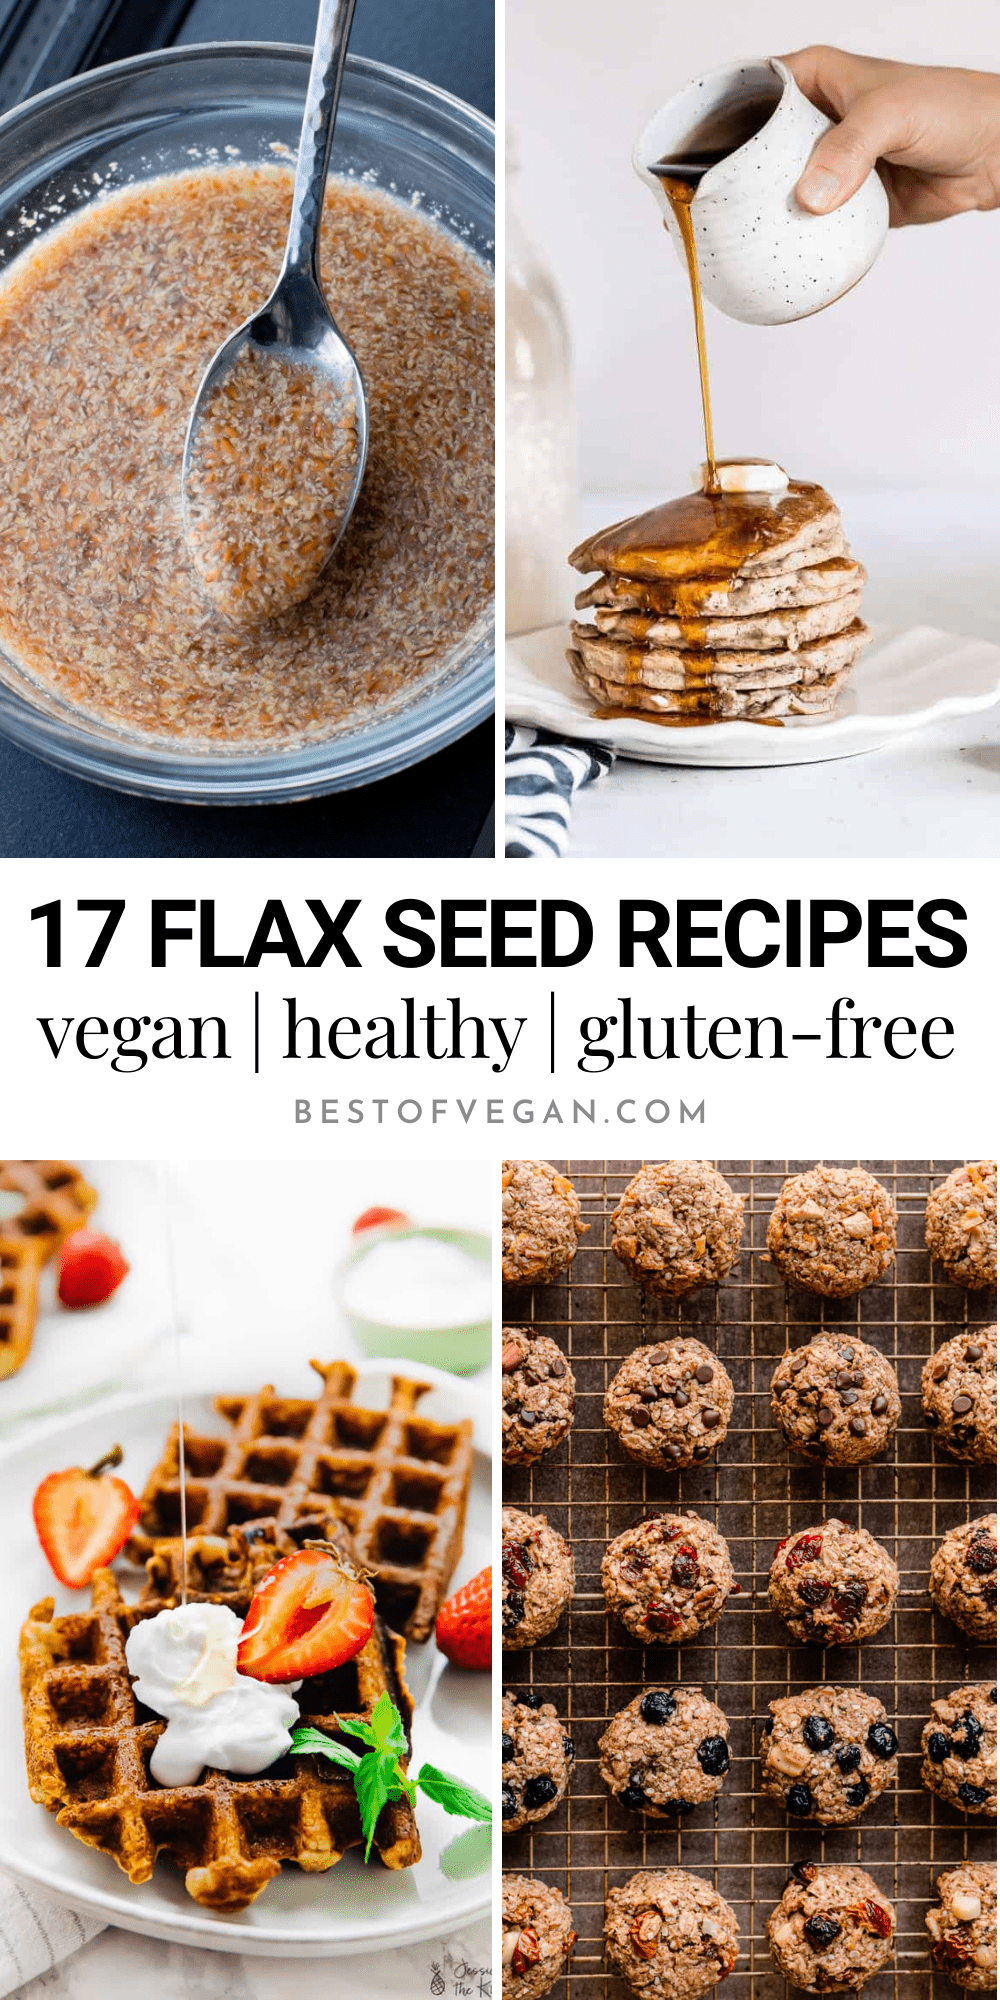 17 healthy flax seed recipes vegan gluten-free 